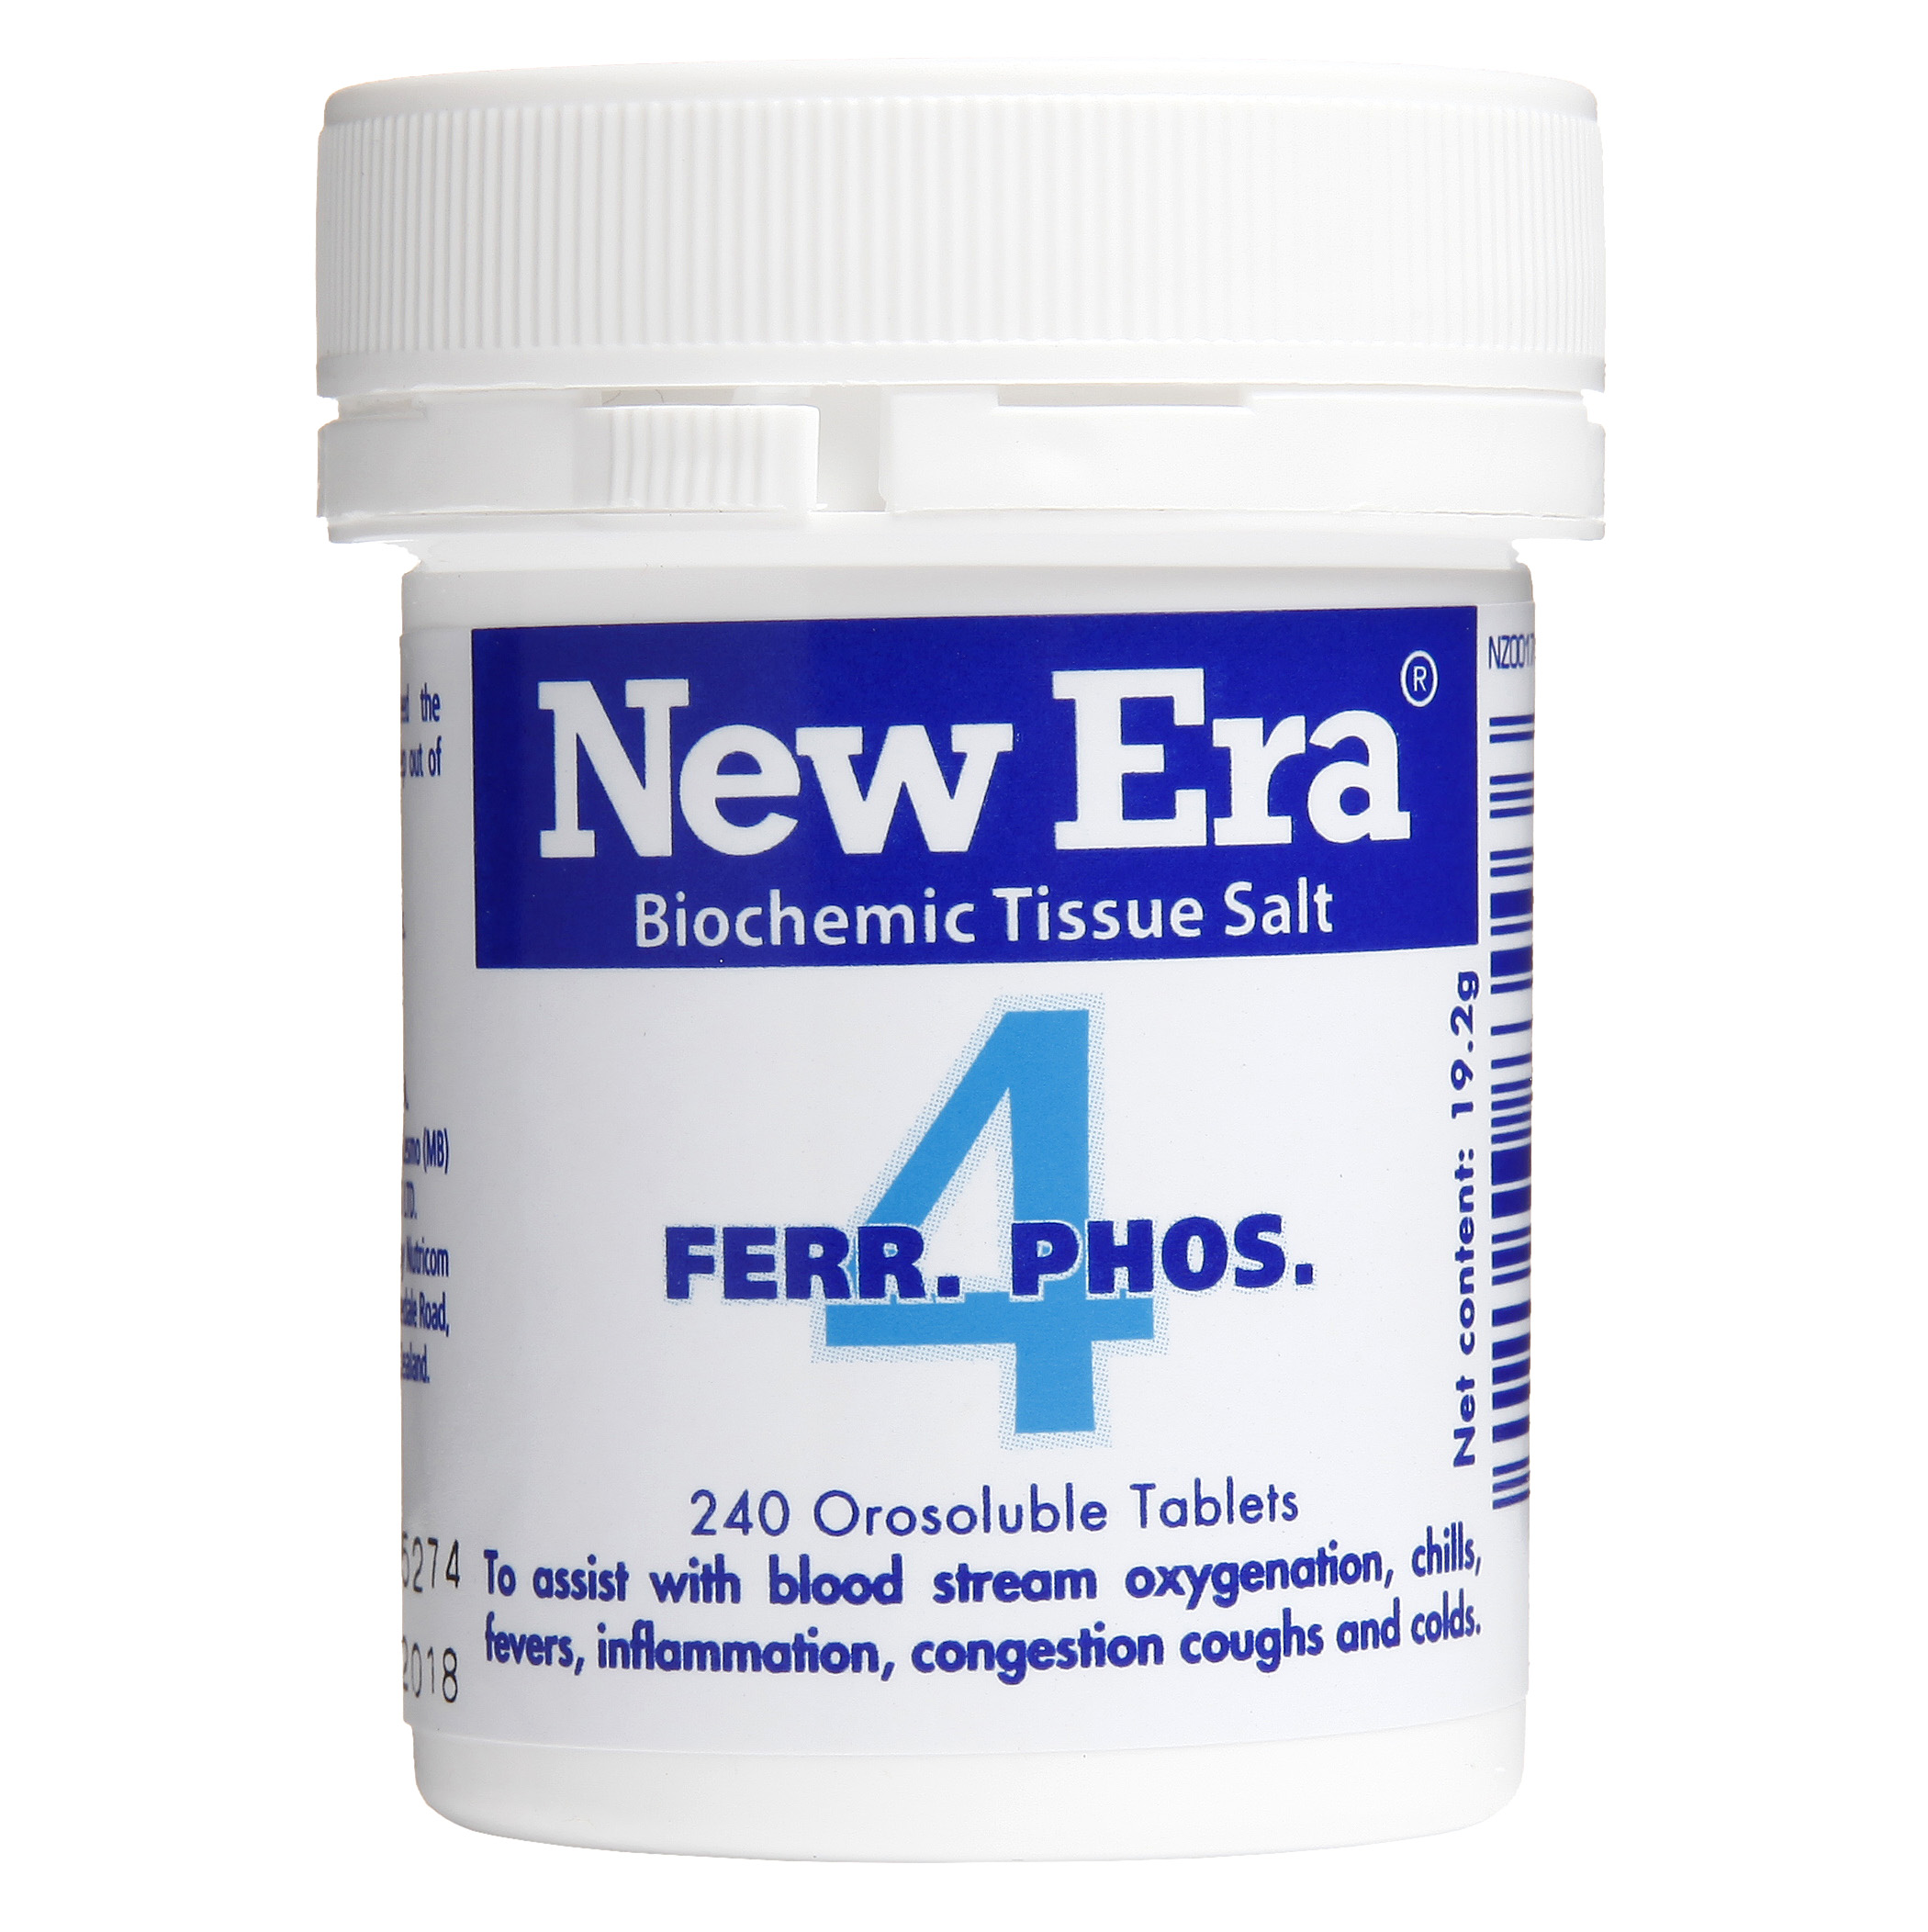 New Era Tissue Salt Ferr. Phos. #4 - The Oxygen Transporter